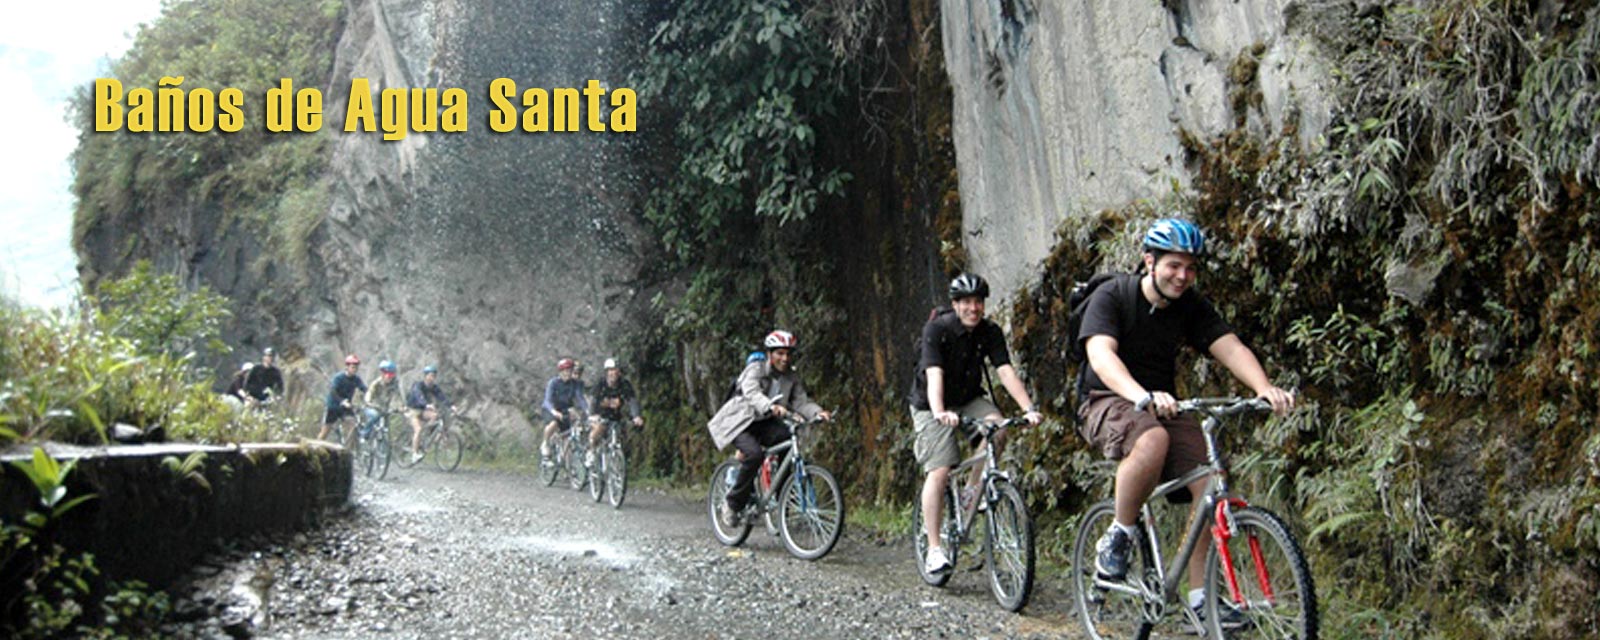 banos_agua_santa_hotspots_tours5